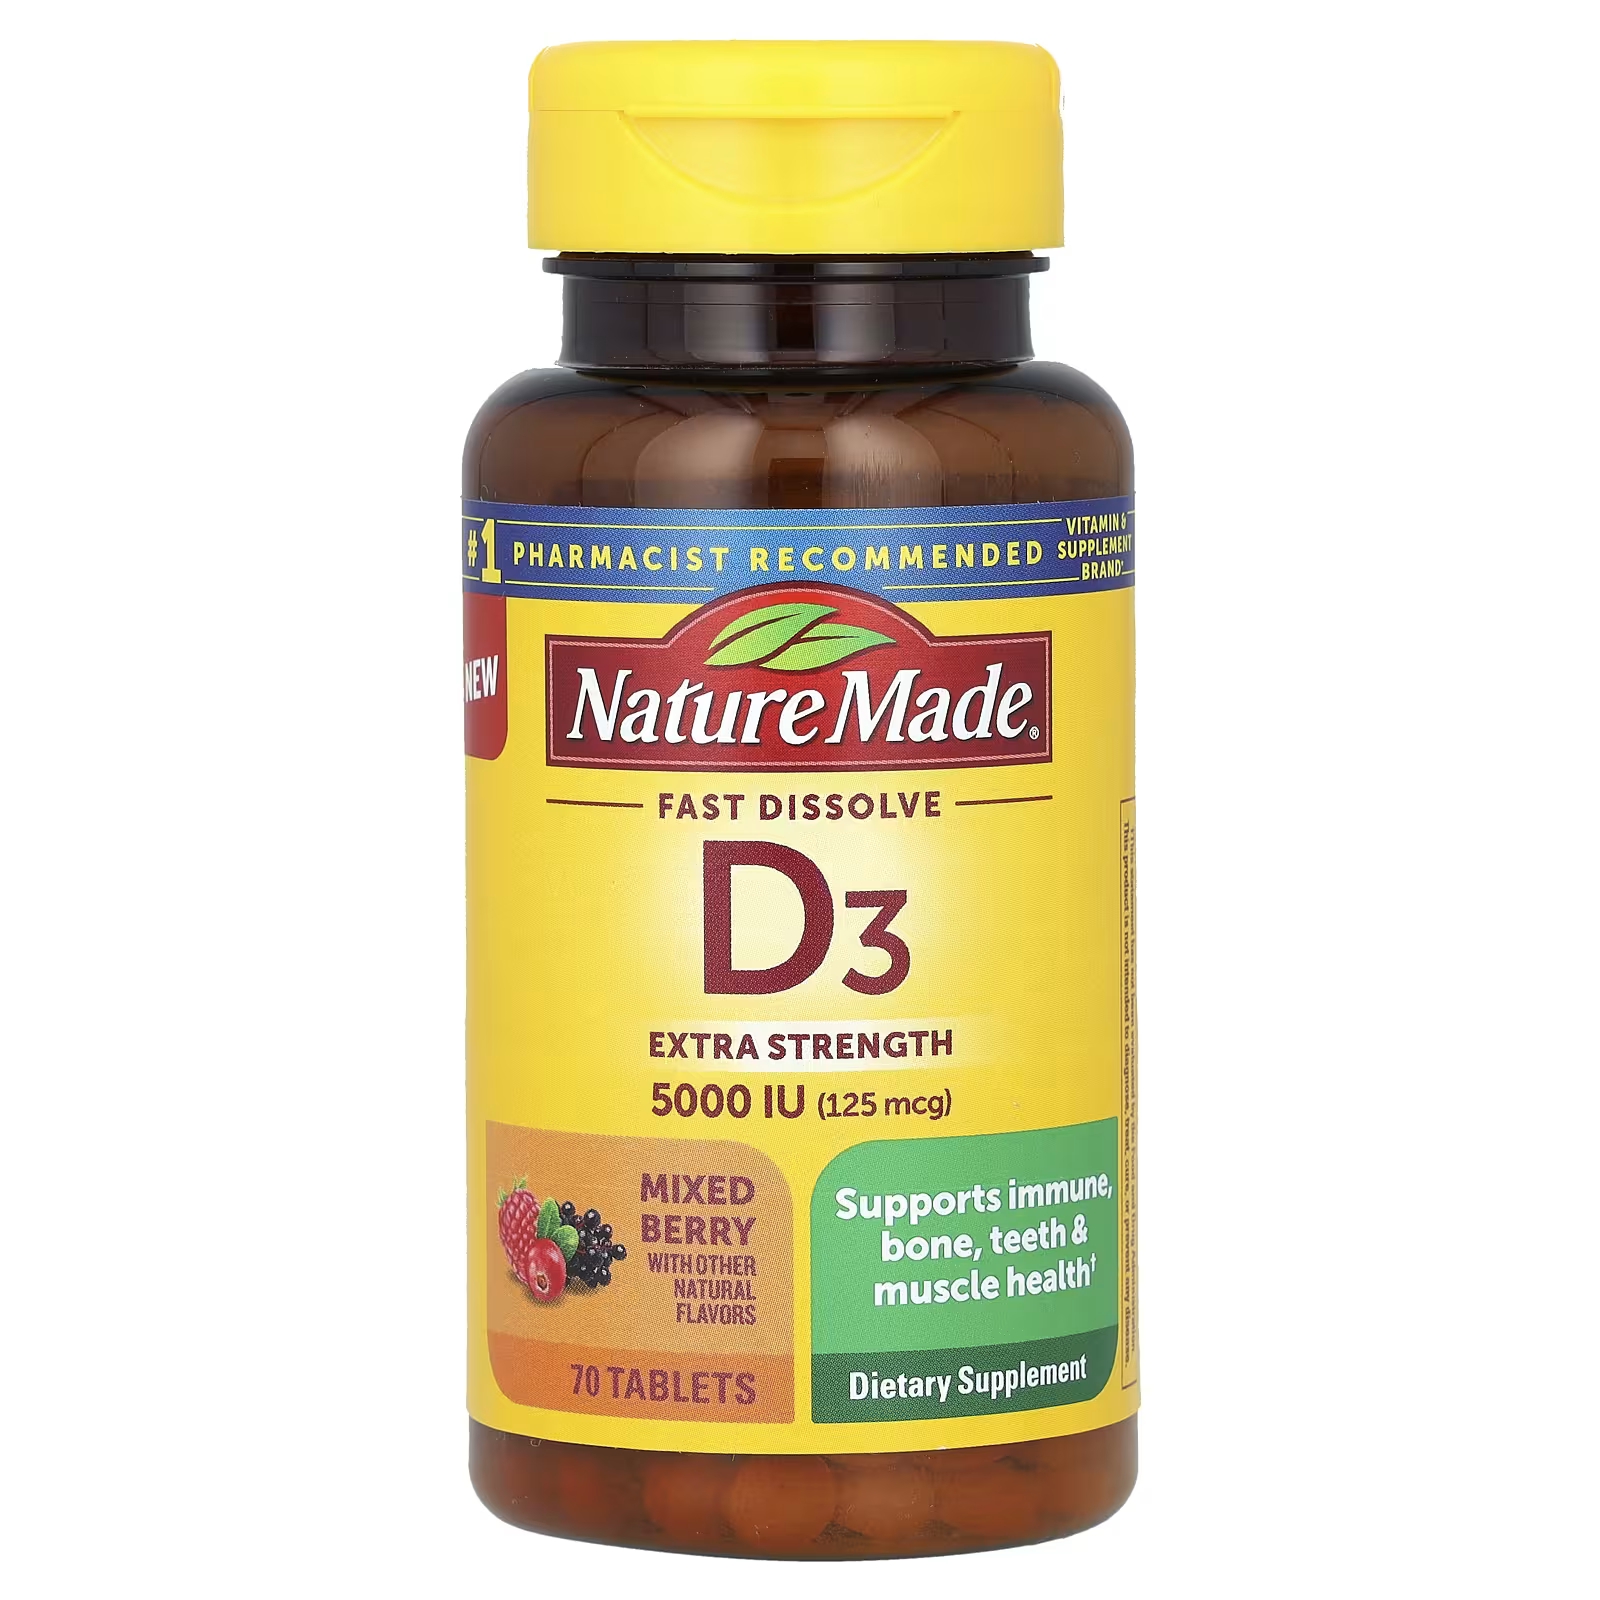 Пищевая добавка Nature Made Fast Dissolve D3 Extra Strength смесь ягод, 70 таблеток цена и фото